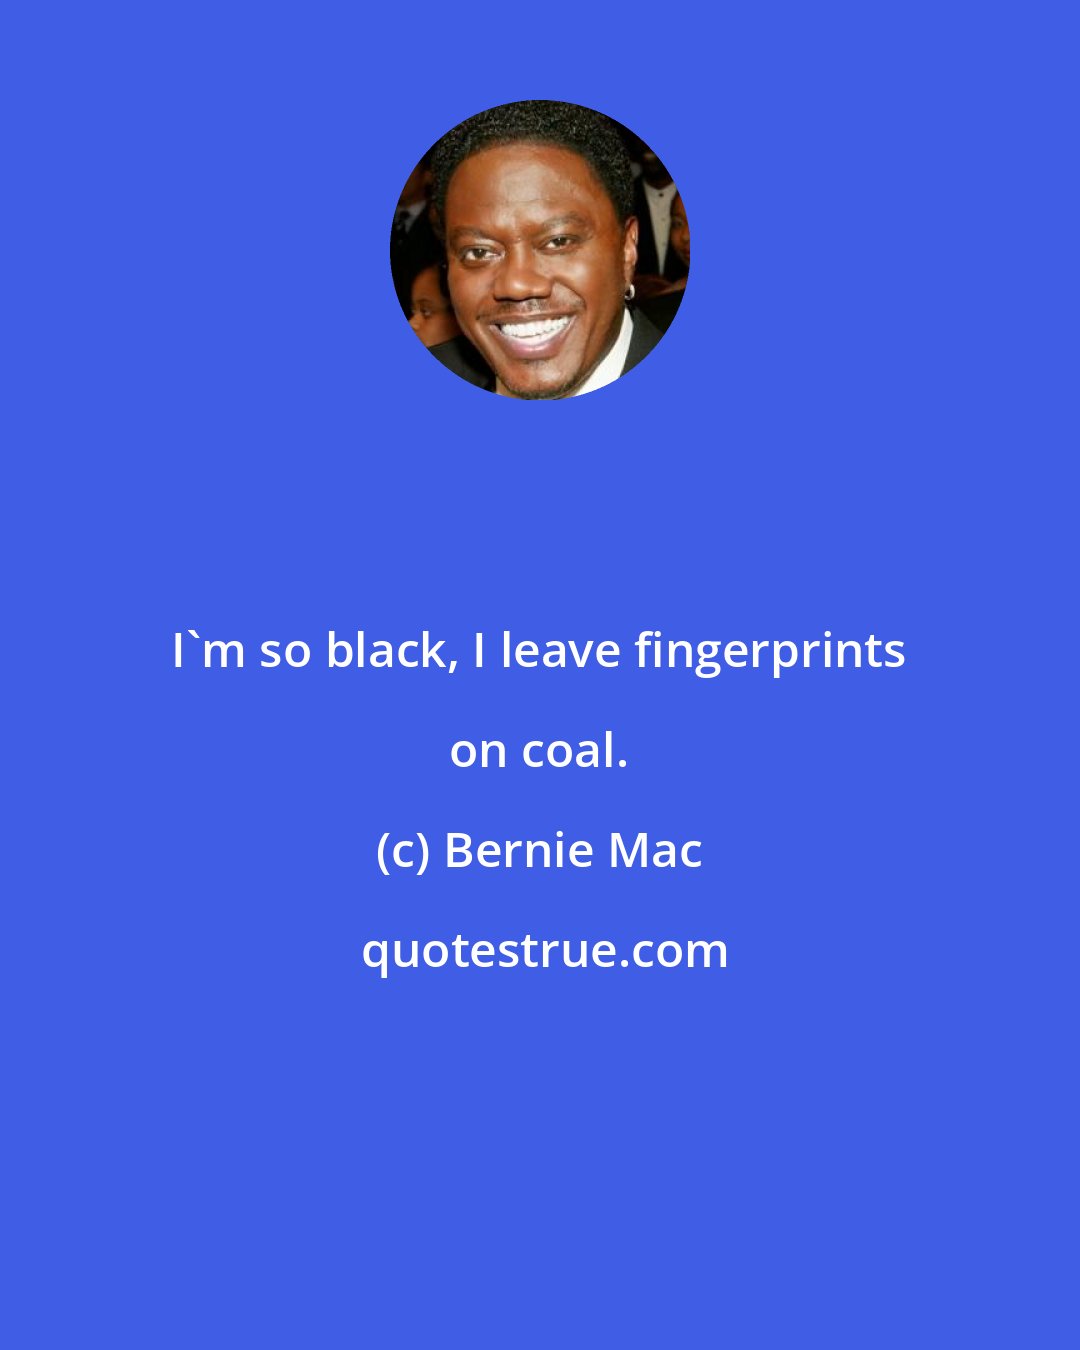 Bernie Mac: I'm so black, I leave fingerprints on coal.